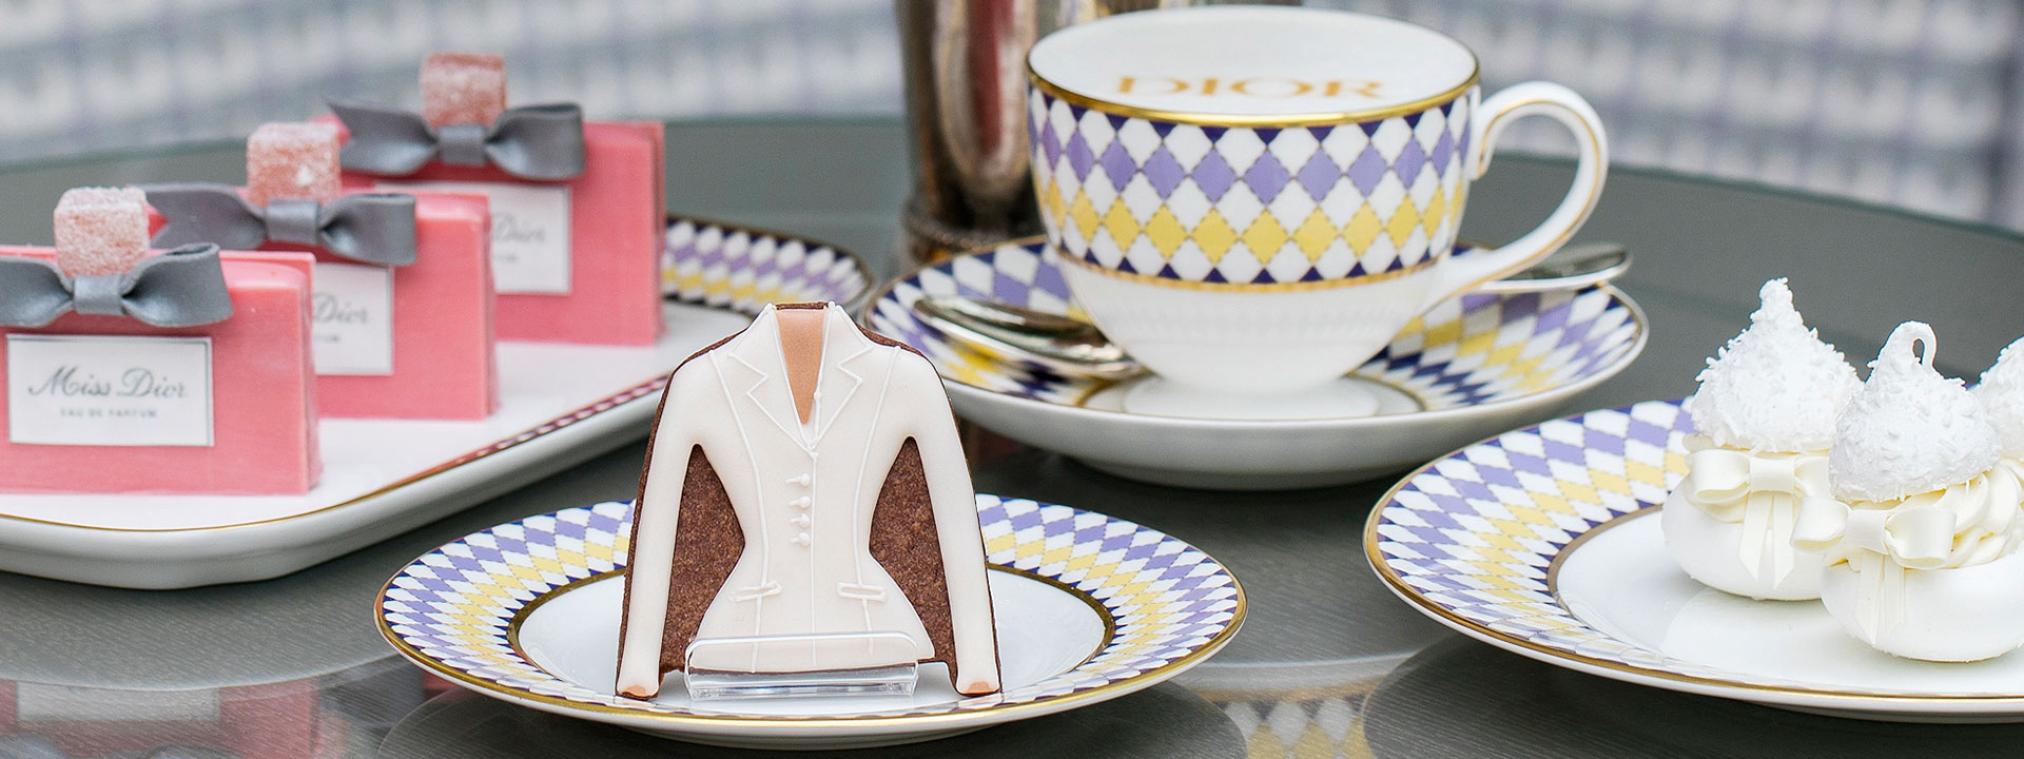 Vanaf nu kan je smullen van Dior-lekkernijen in Londen!